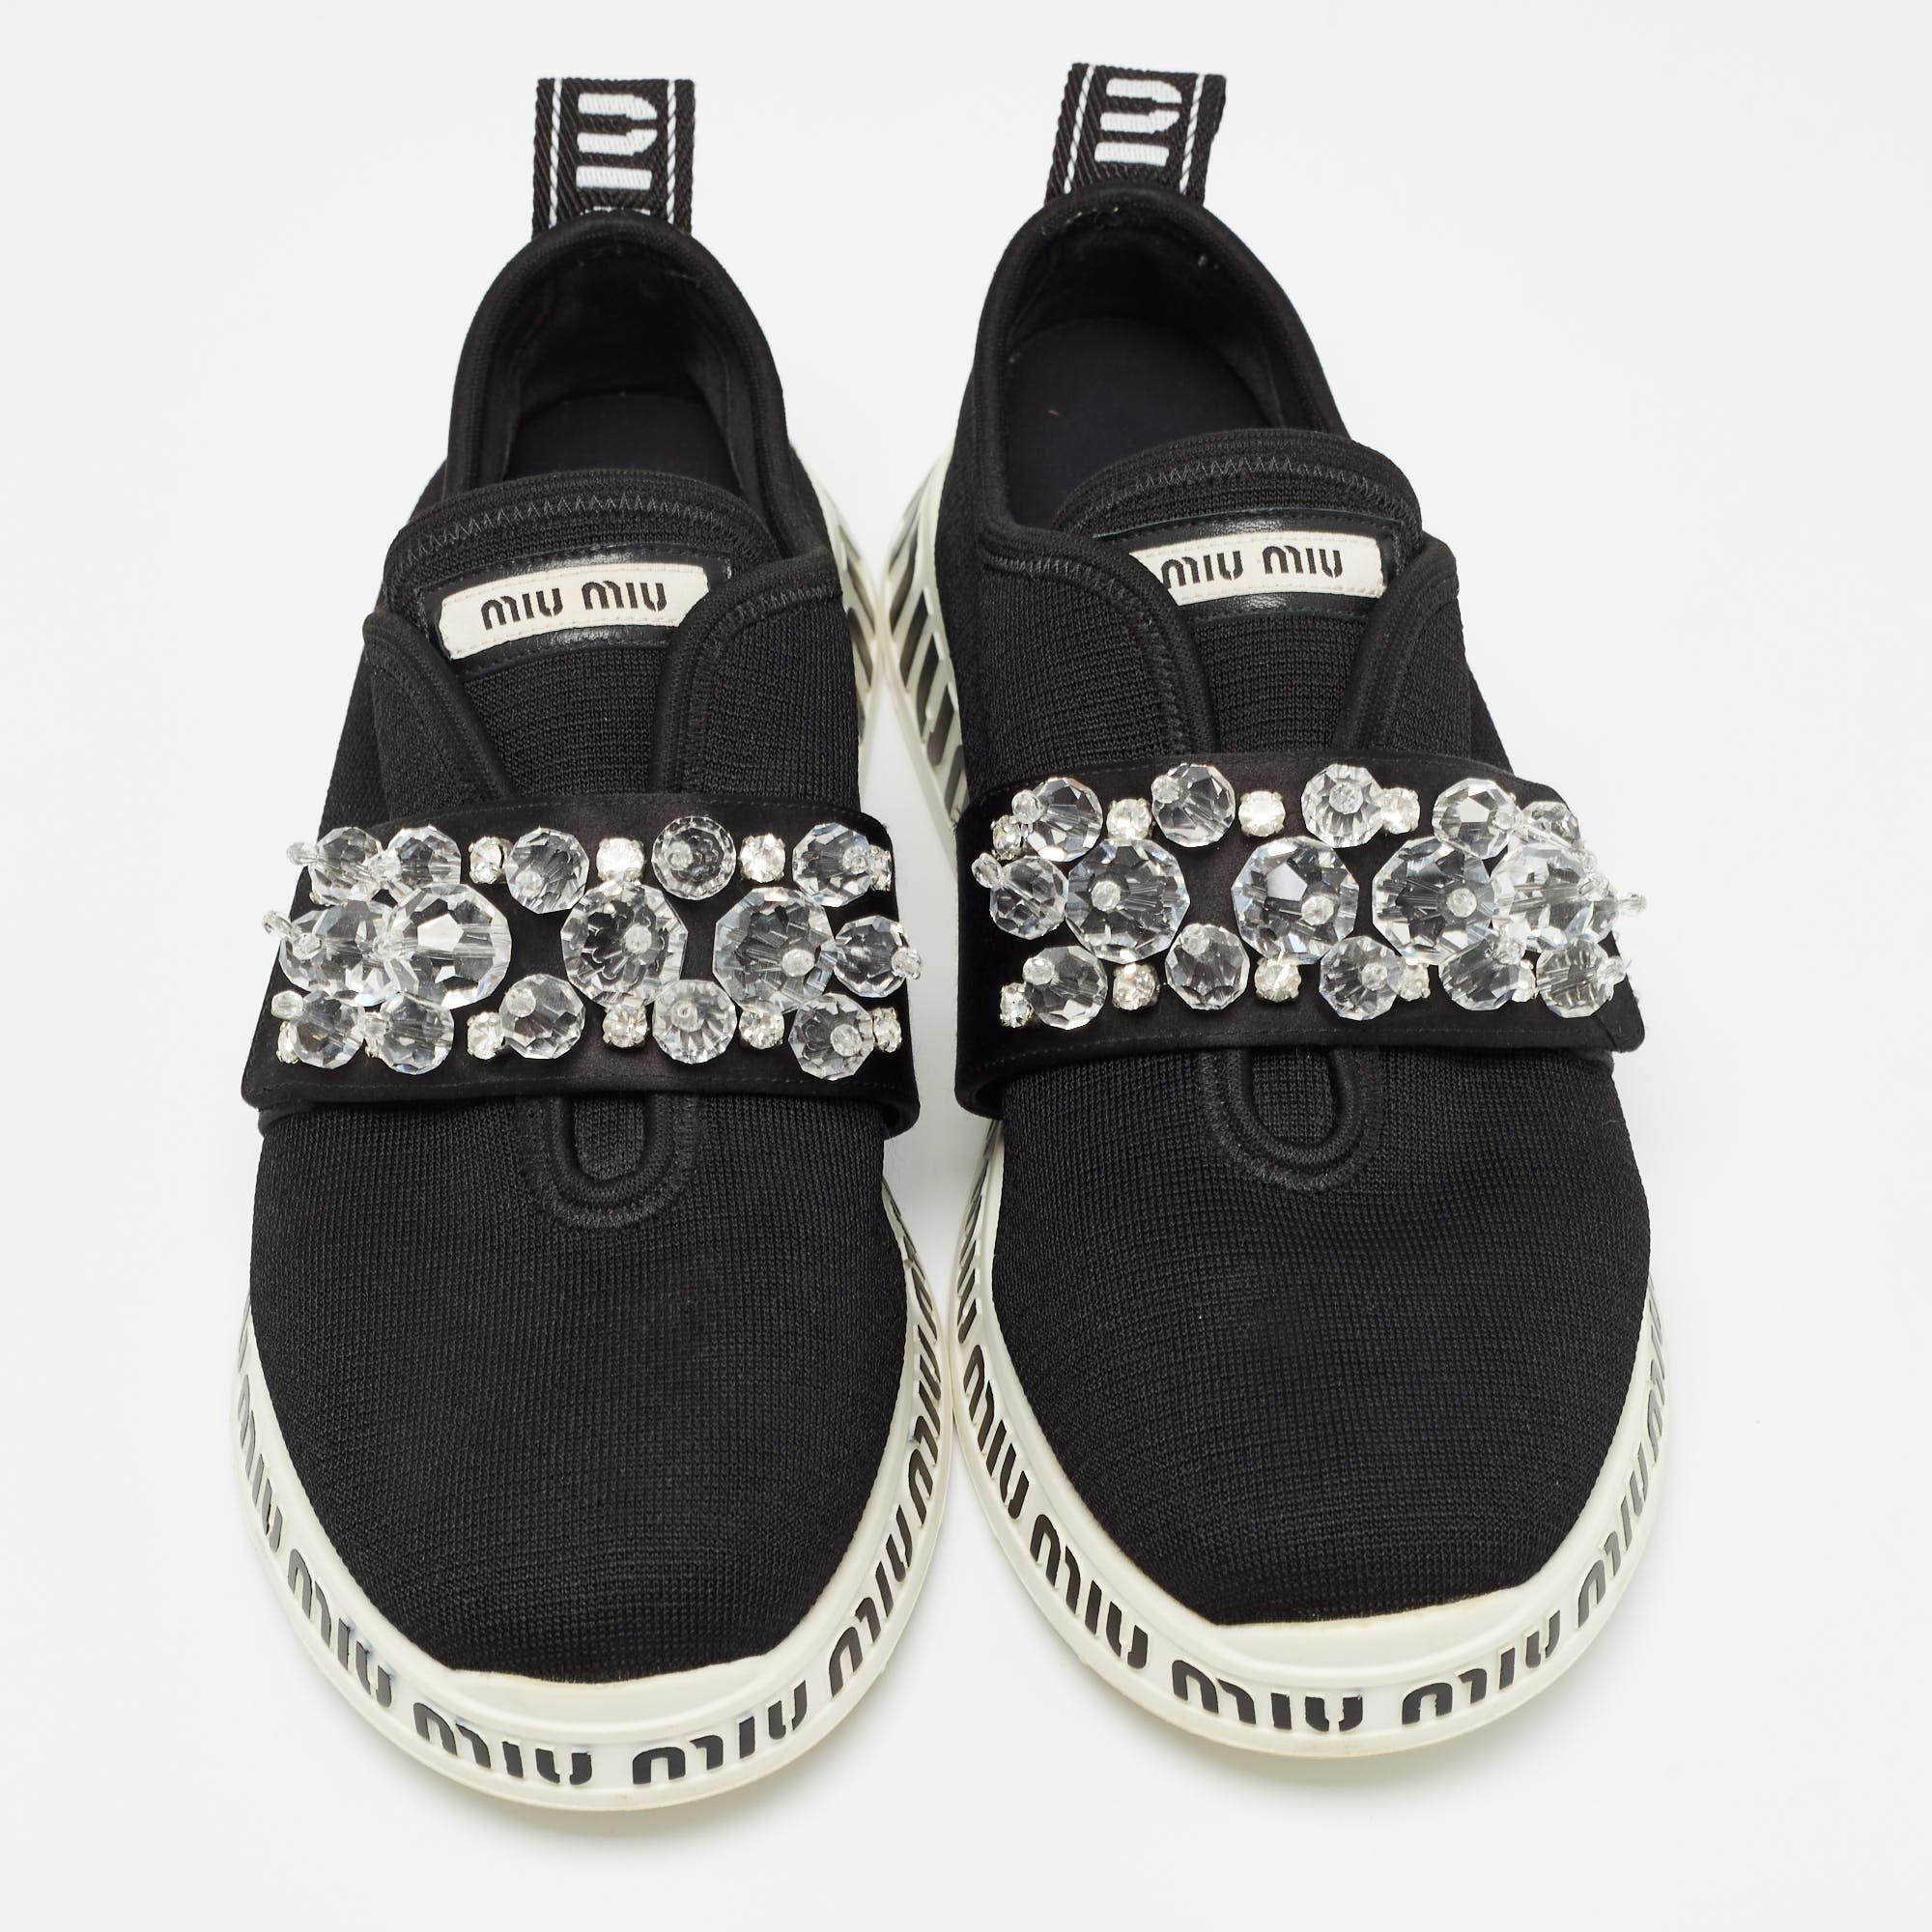 Miu Miu Black Fabric and Satin Crystal Embellished Slip On Sneakers Size 38.5 1